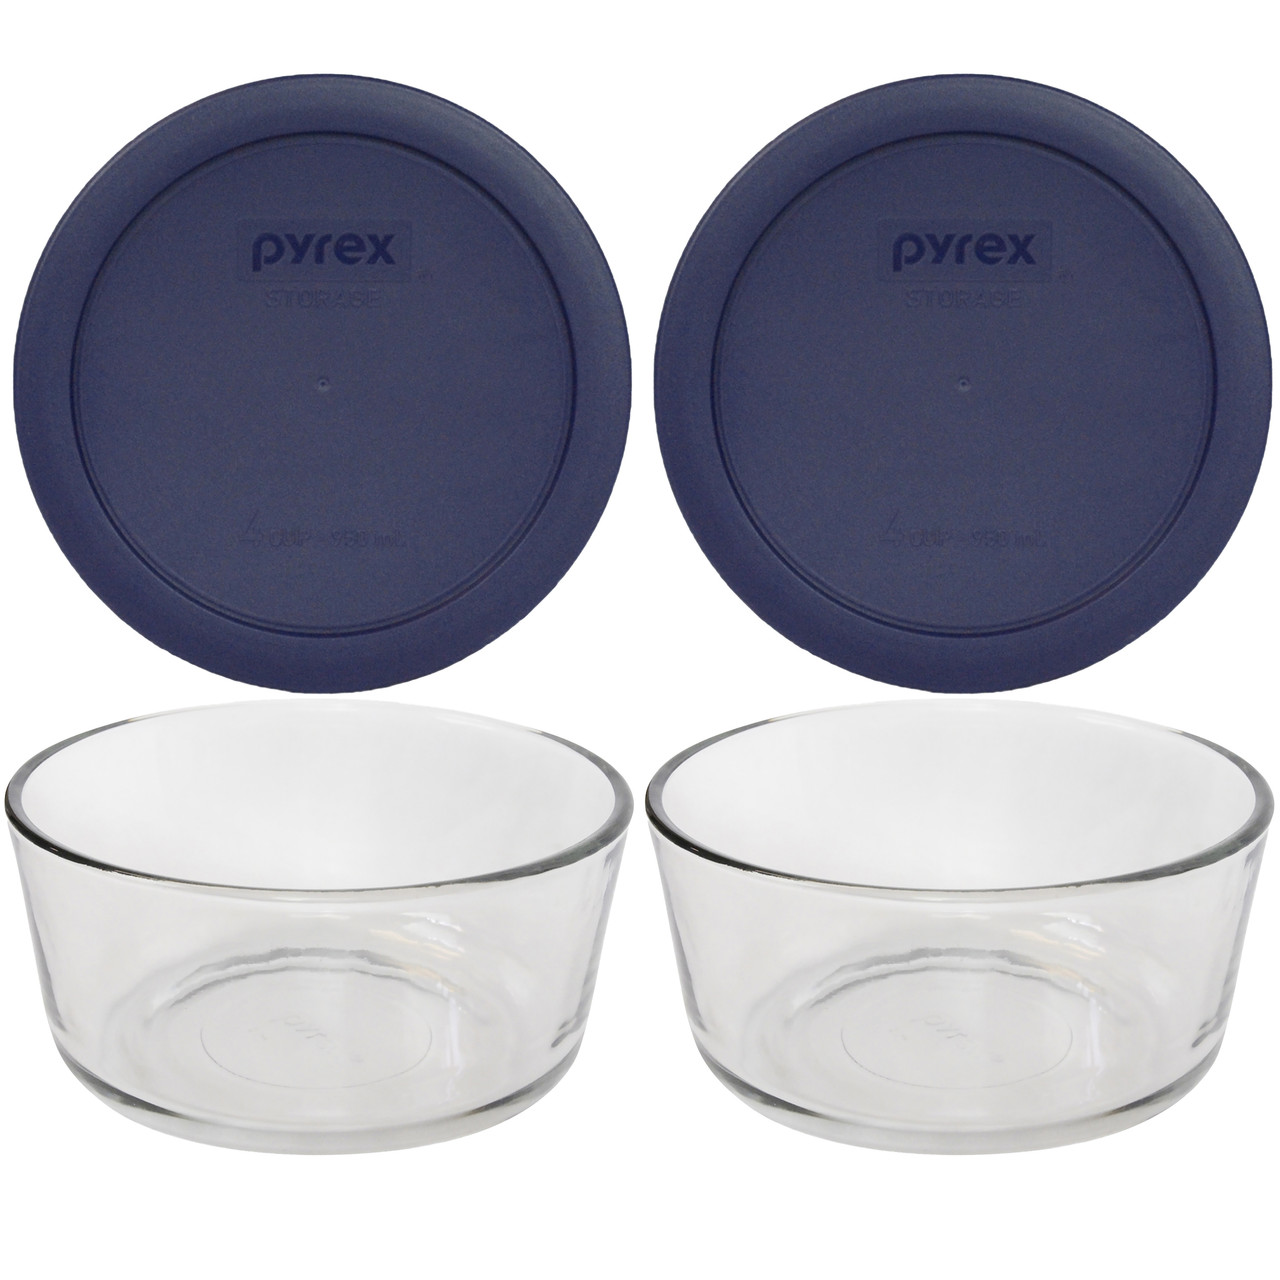 Pyrex Simply Store 14-Piece Food Storage Bowl and Blue Lid Bundle